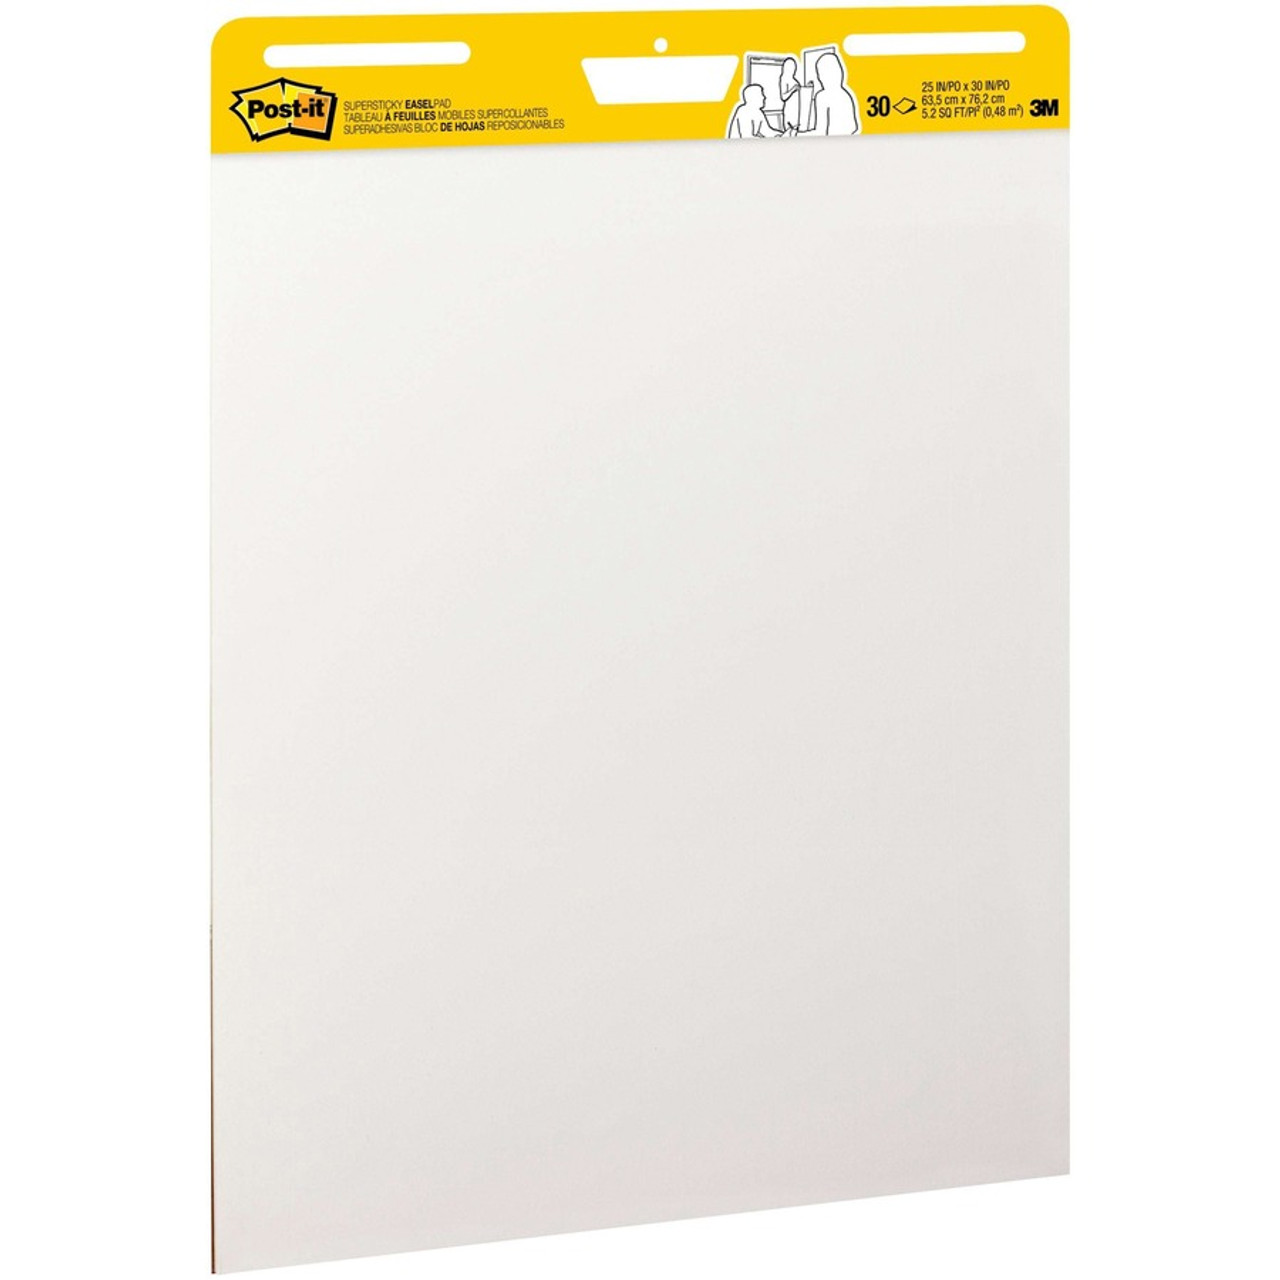  Post-it Self Stick Easel Pads 25 x 30 White 4 30 Sheet  Pads/Carton MMM559VAD